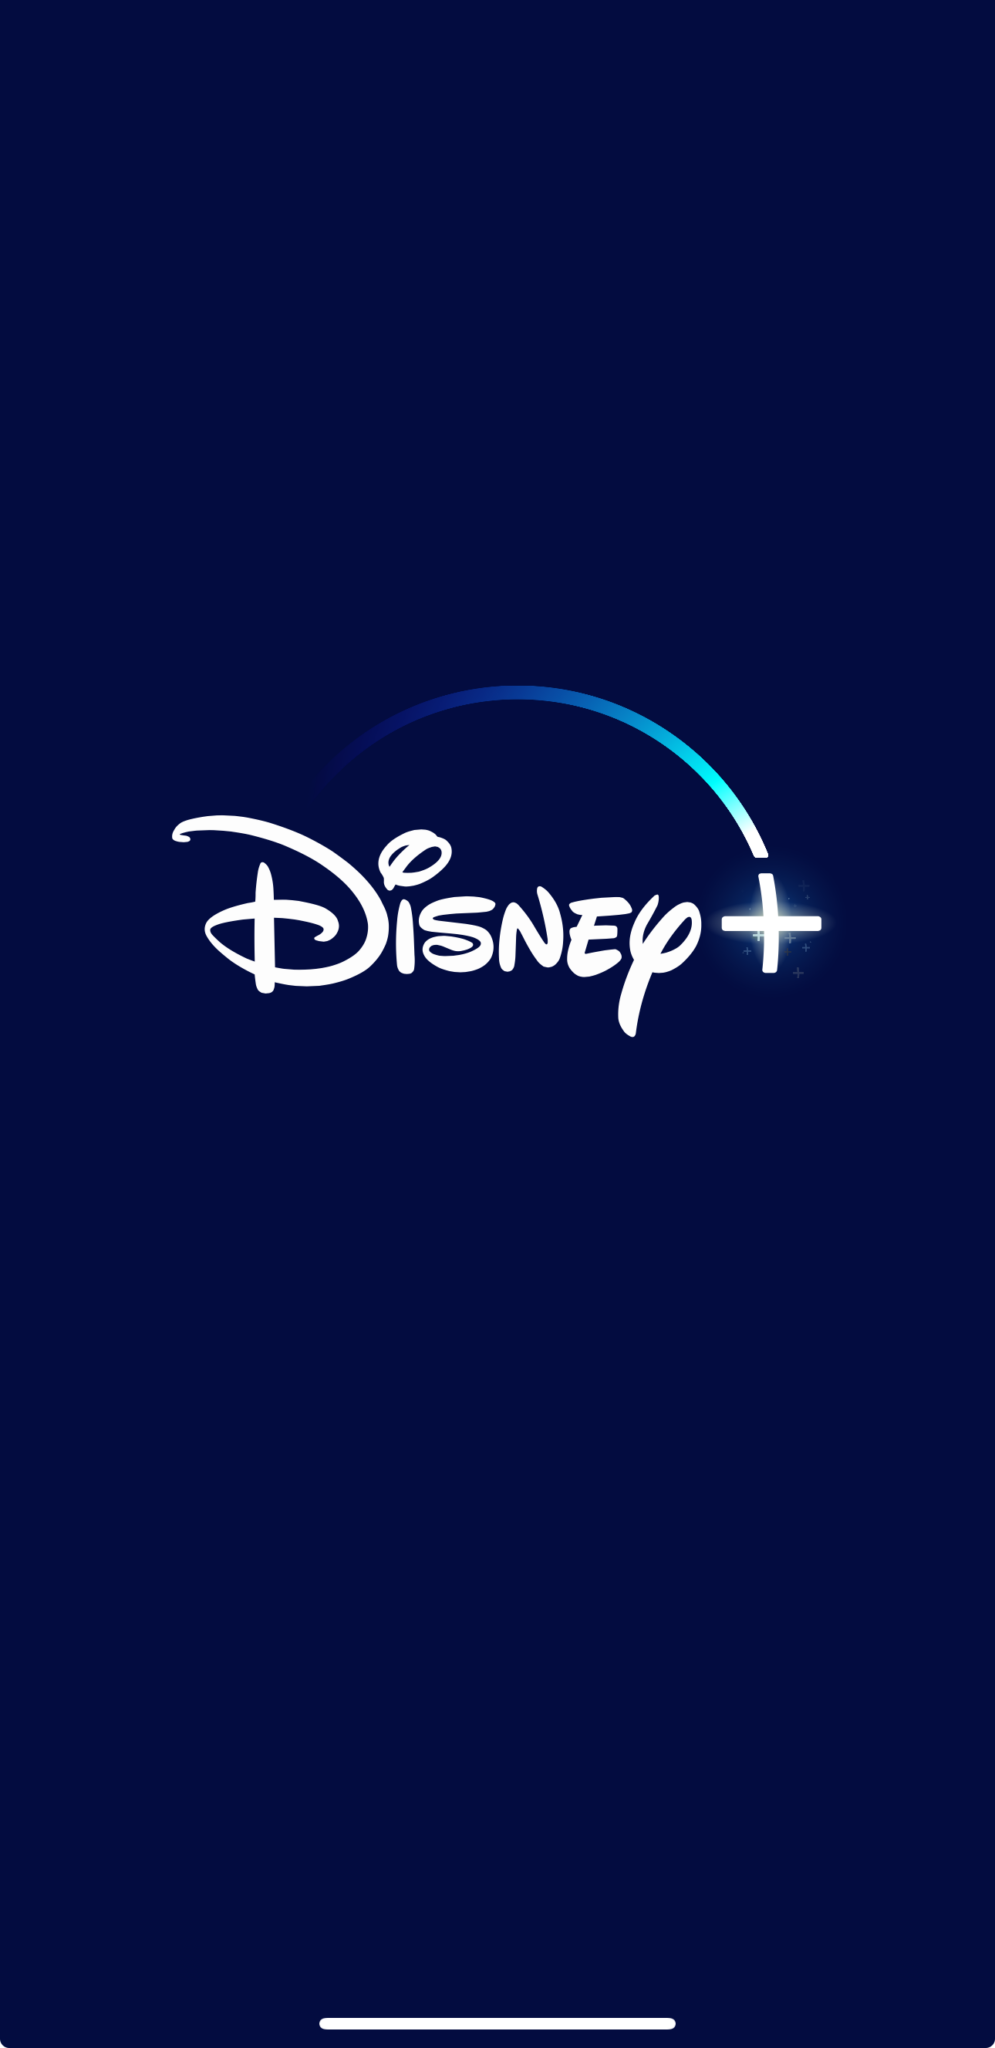 Disney+,peliculas,series,estrenos,cine,comedia